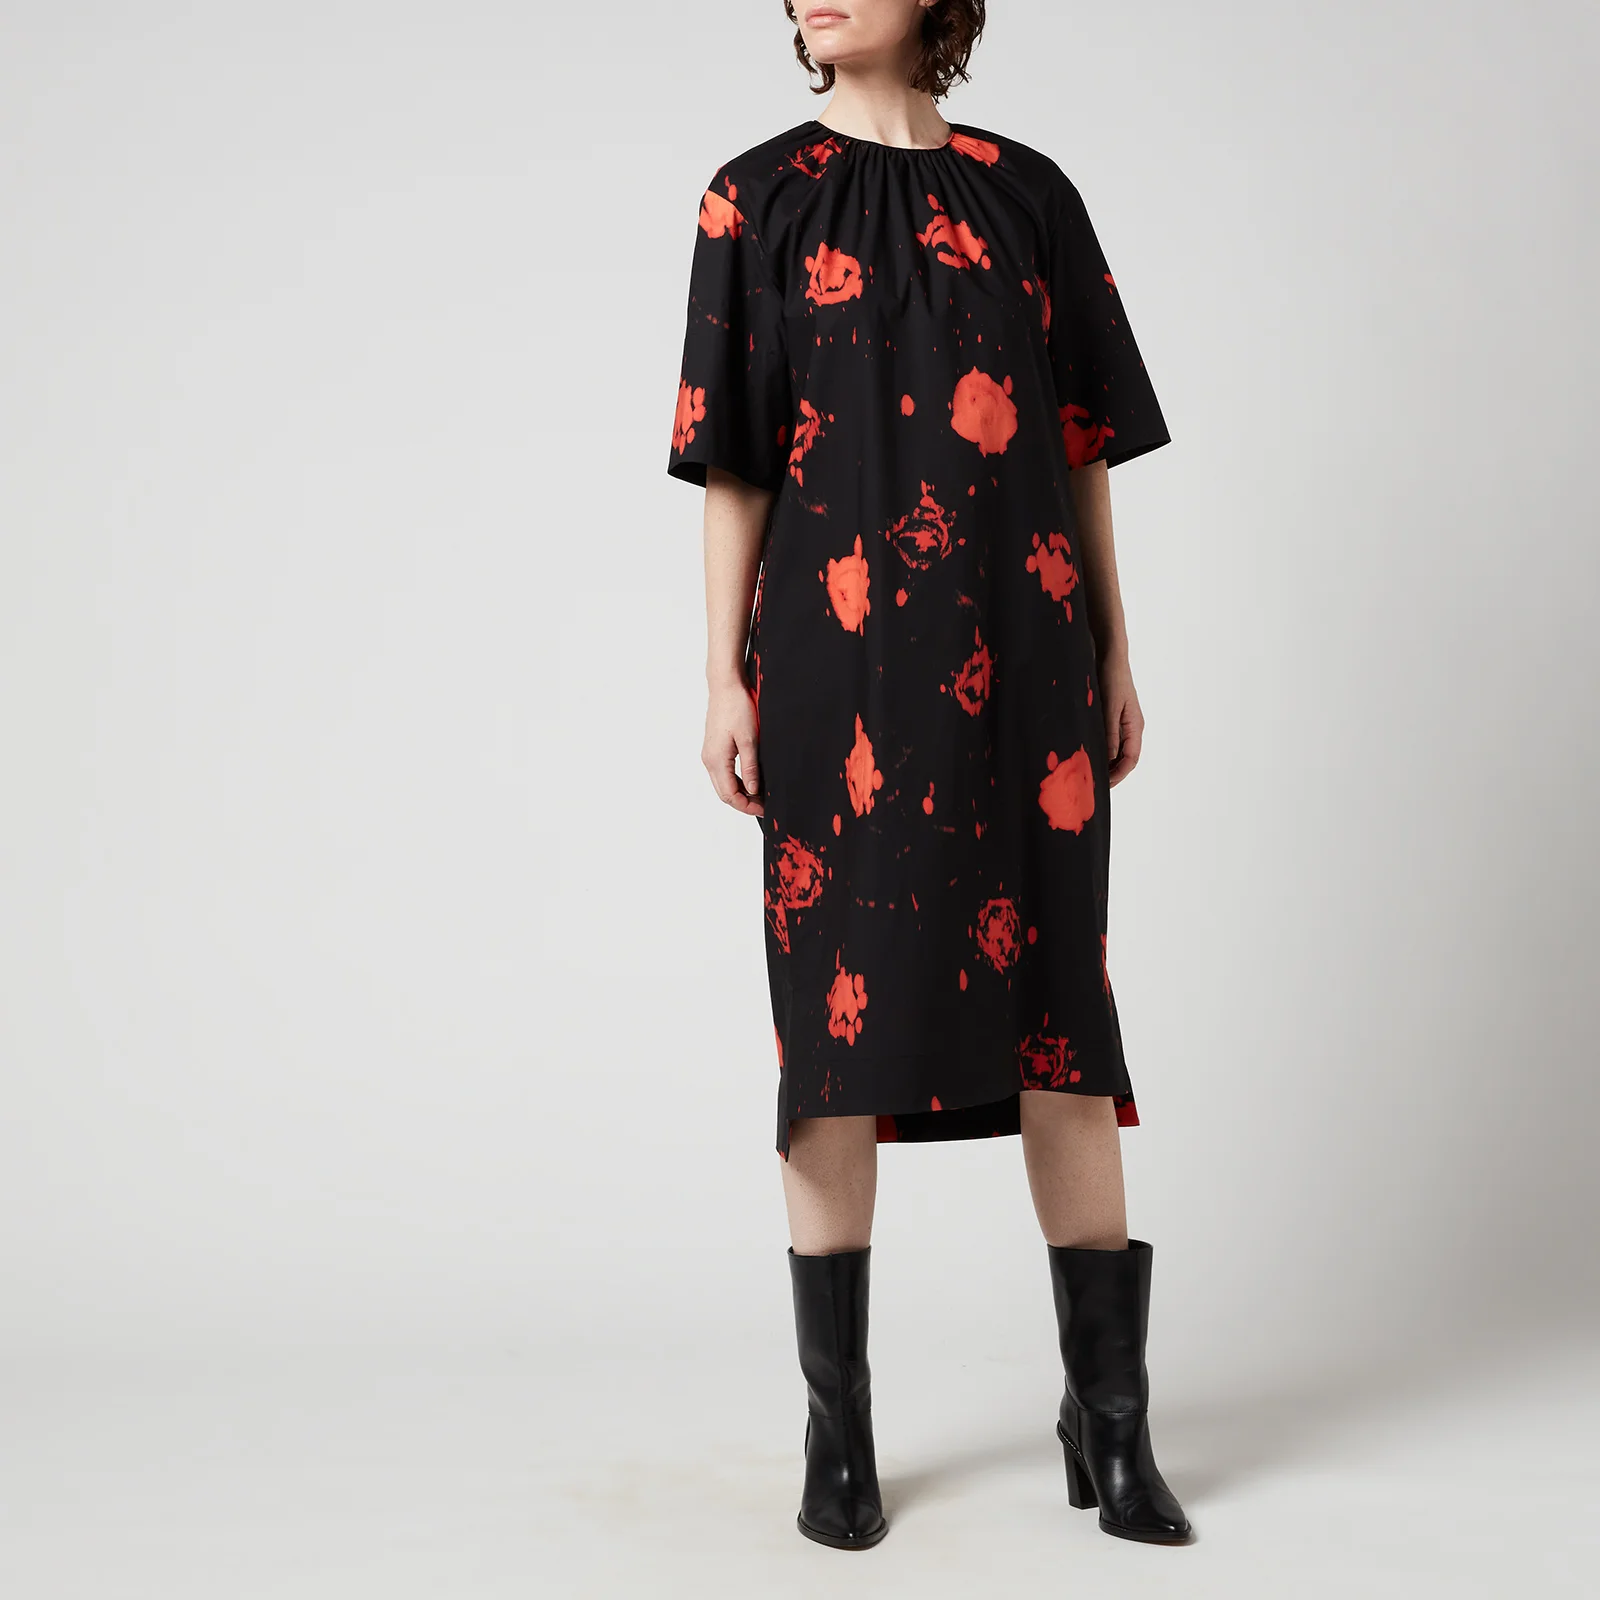 Marni Women's Rose Print Dress - Black Image 1